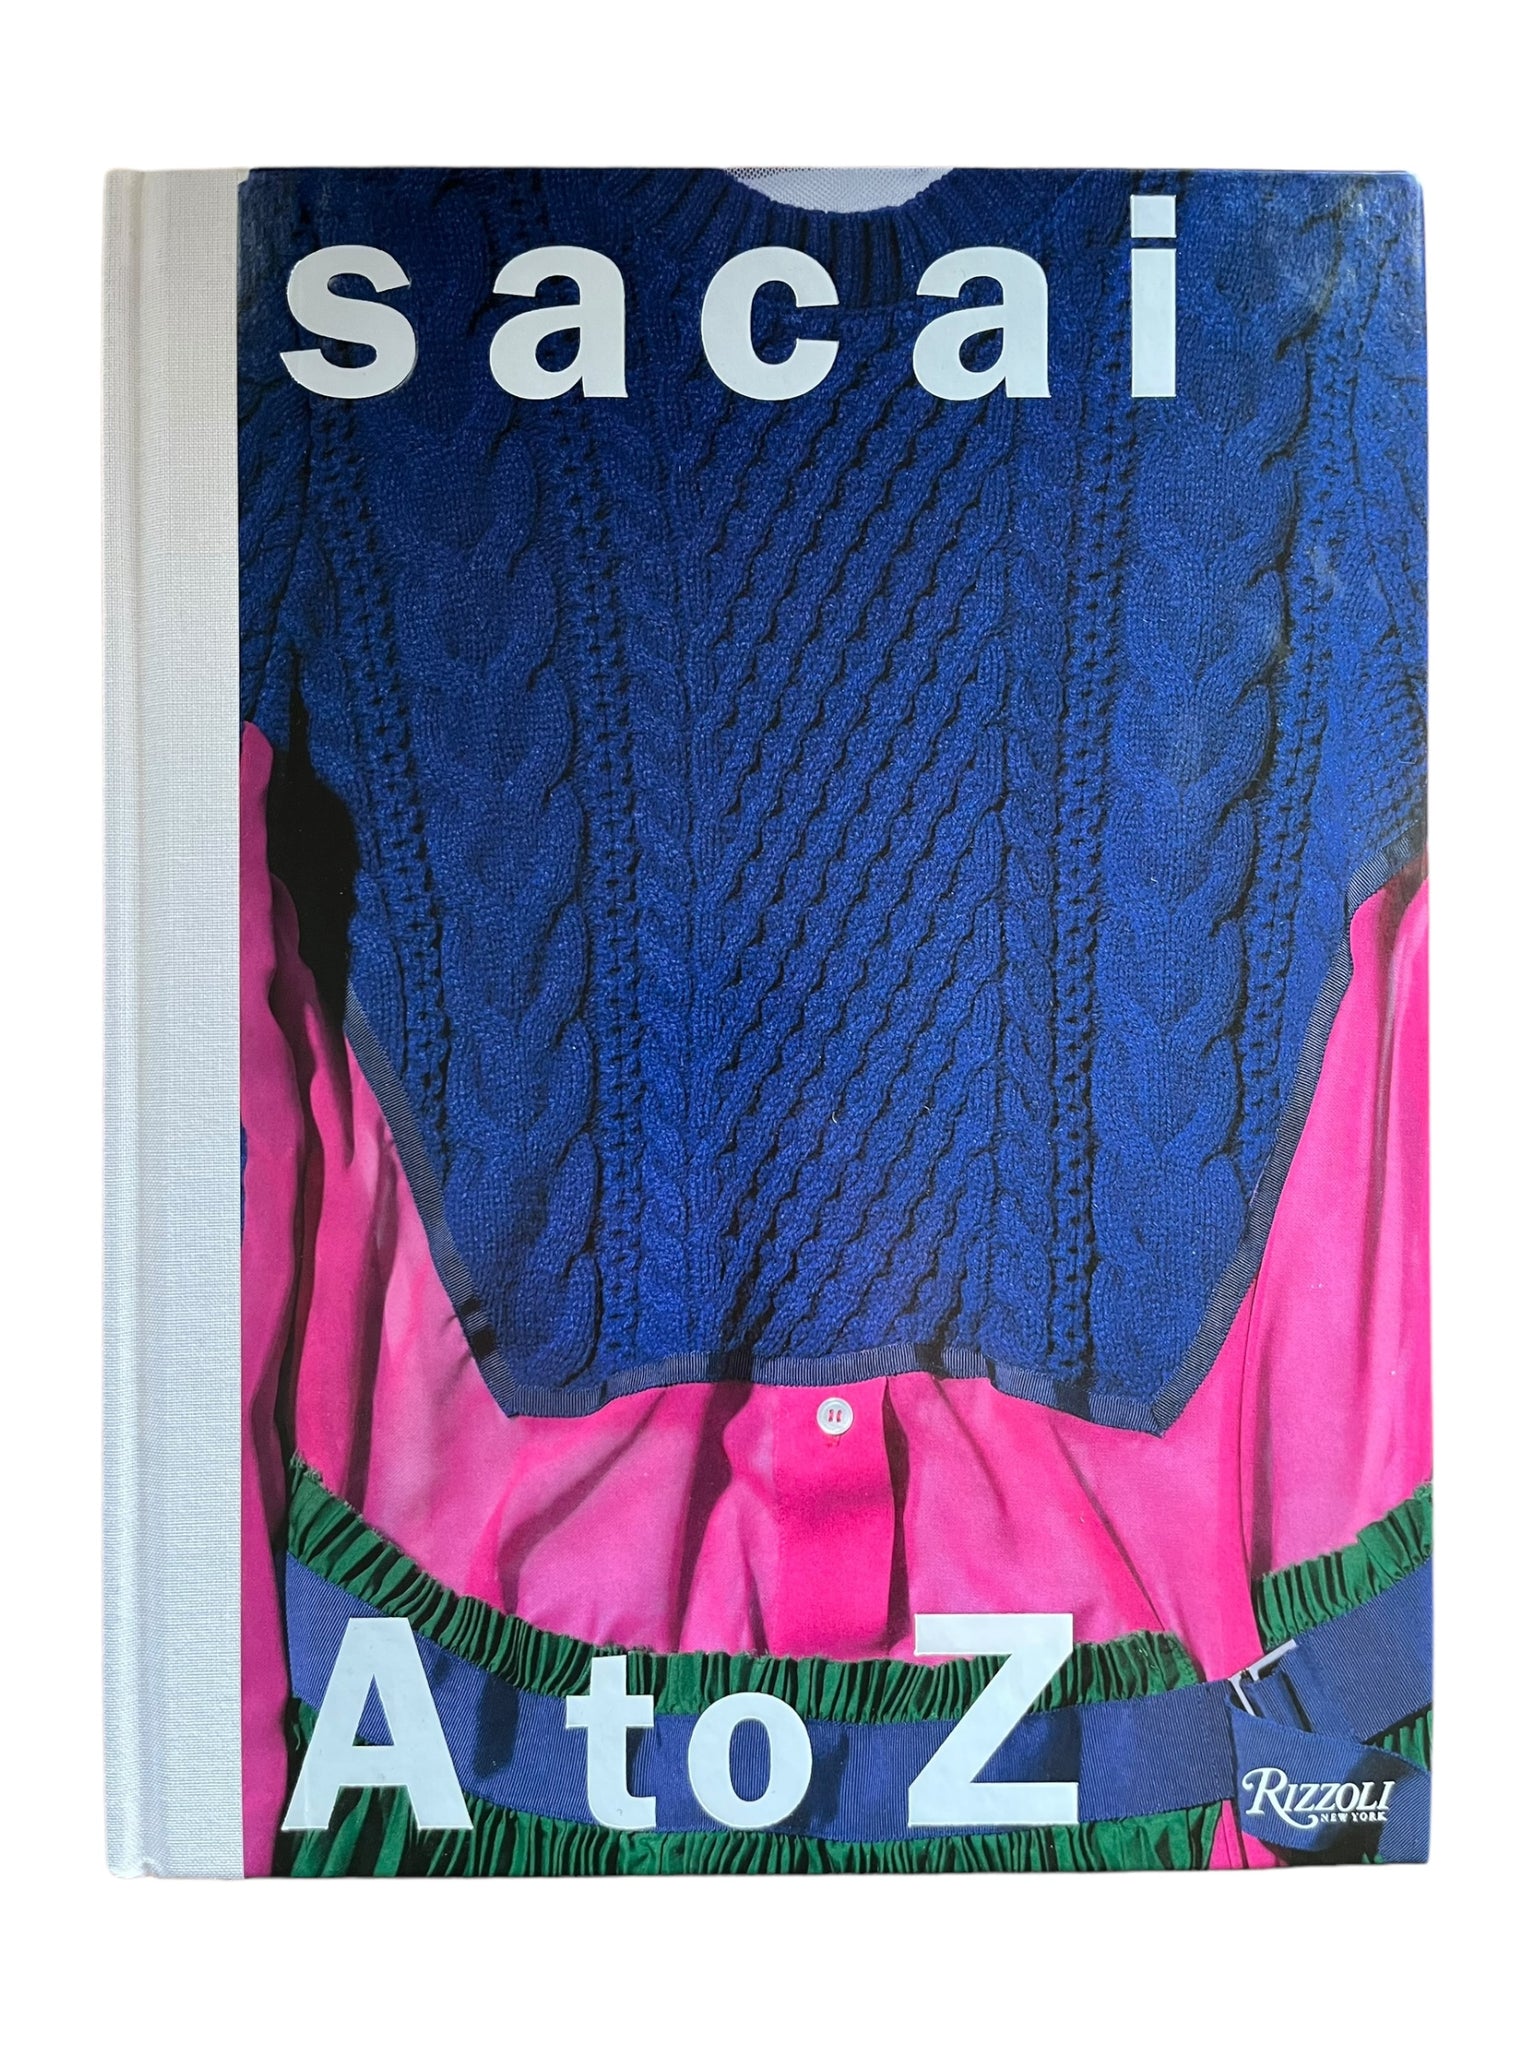 Sacai A-Z (DSM Limited Edition)